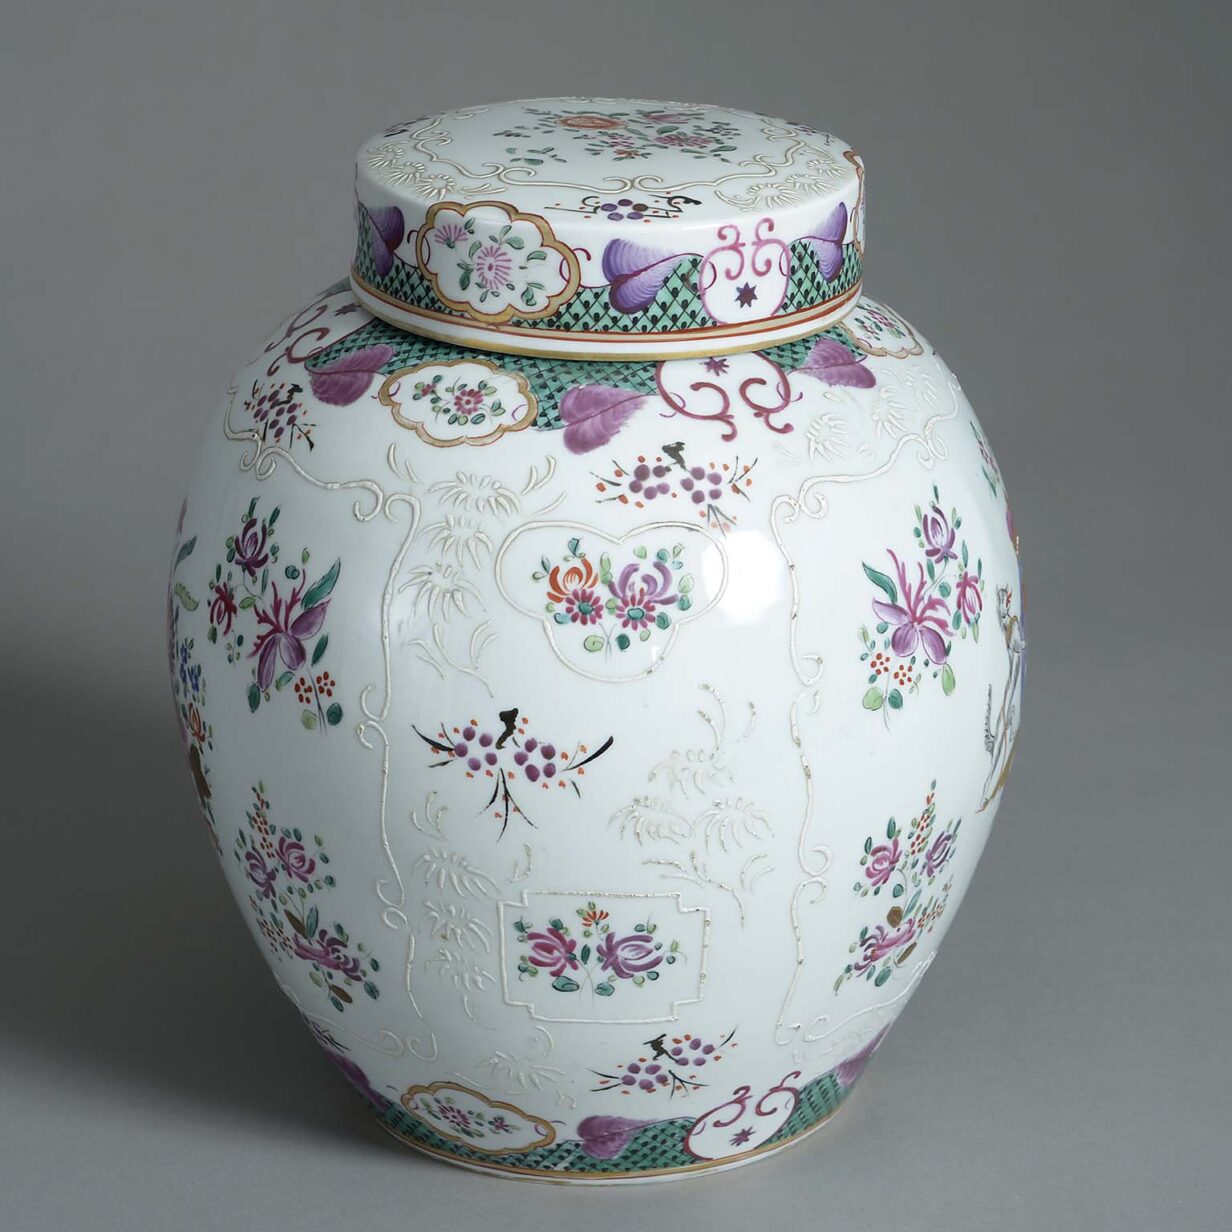 19th century samson famille rose porcelain jar and cover